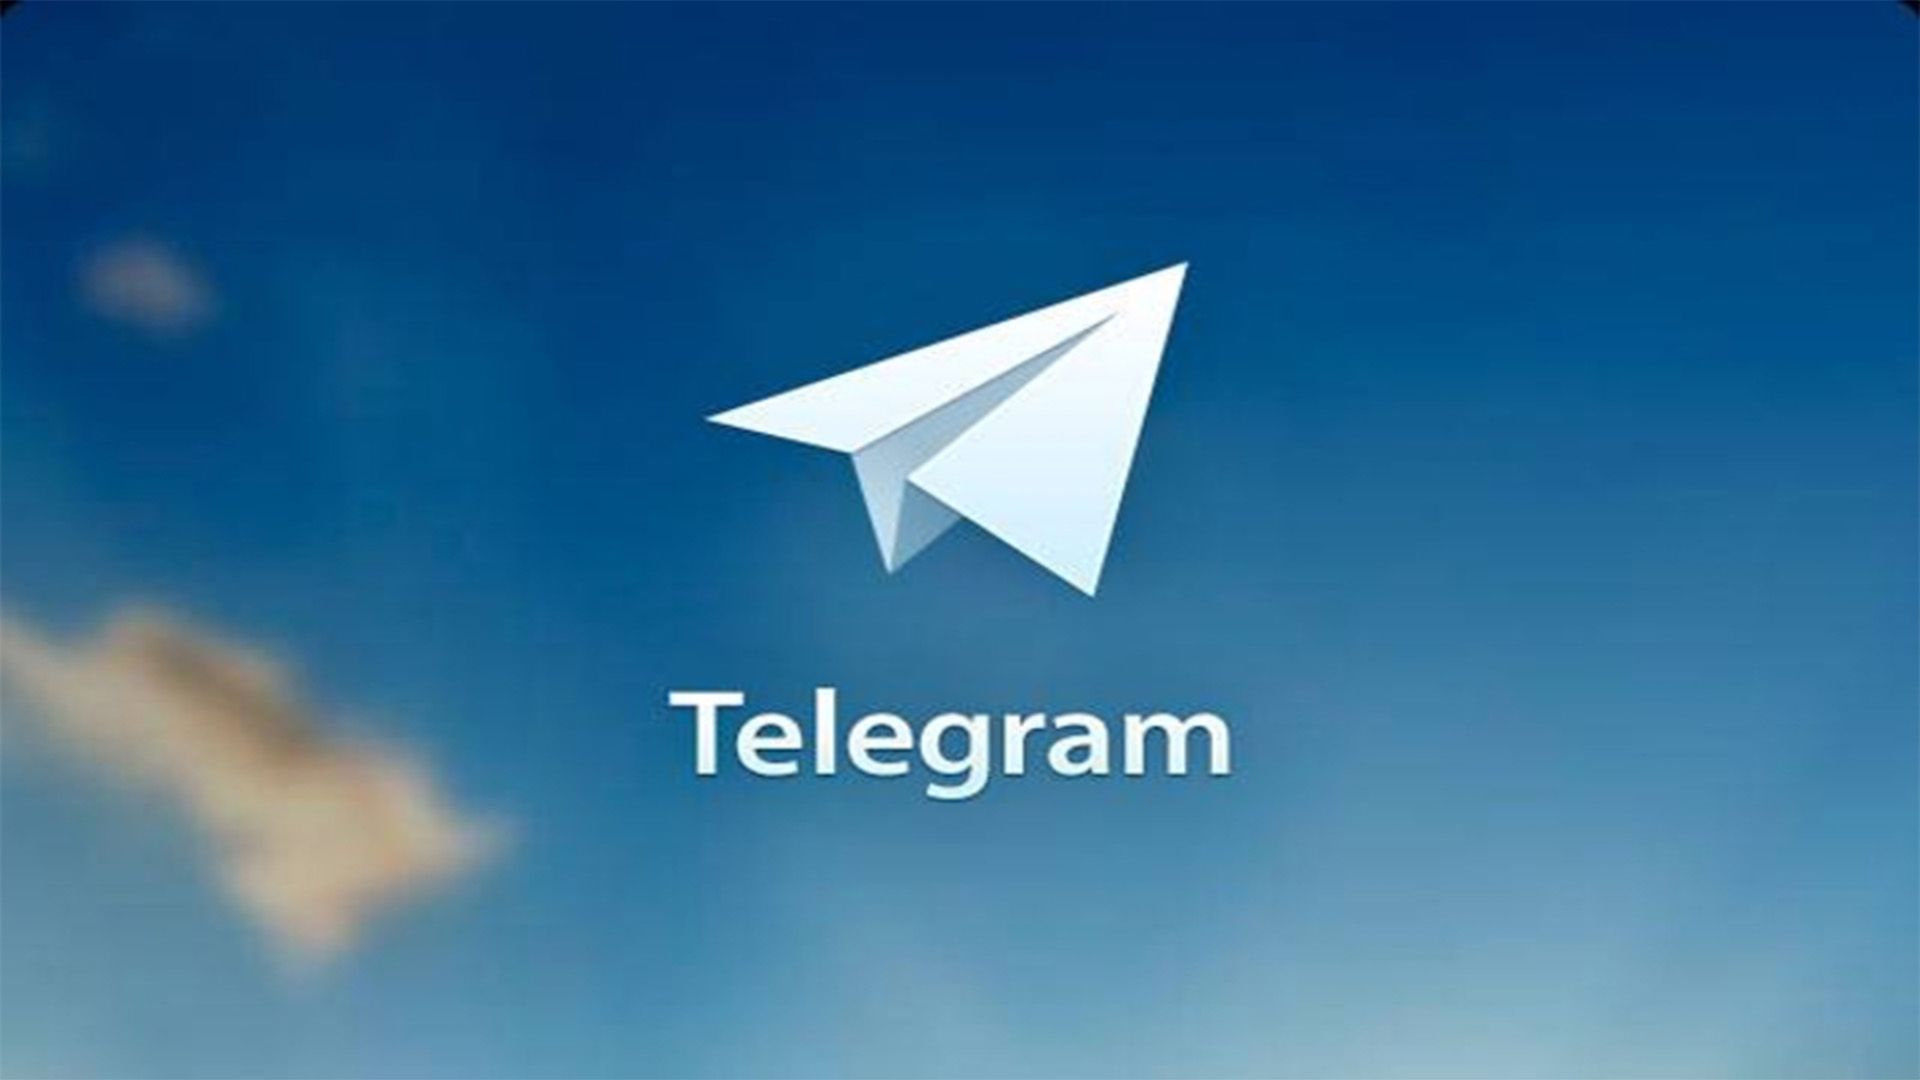 download telegram for pc free